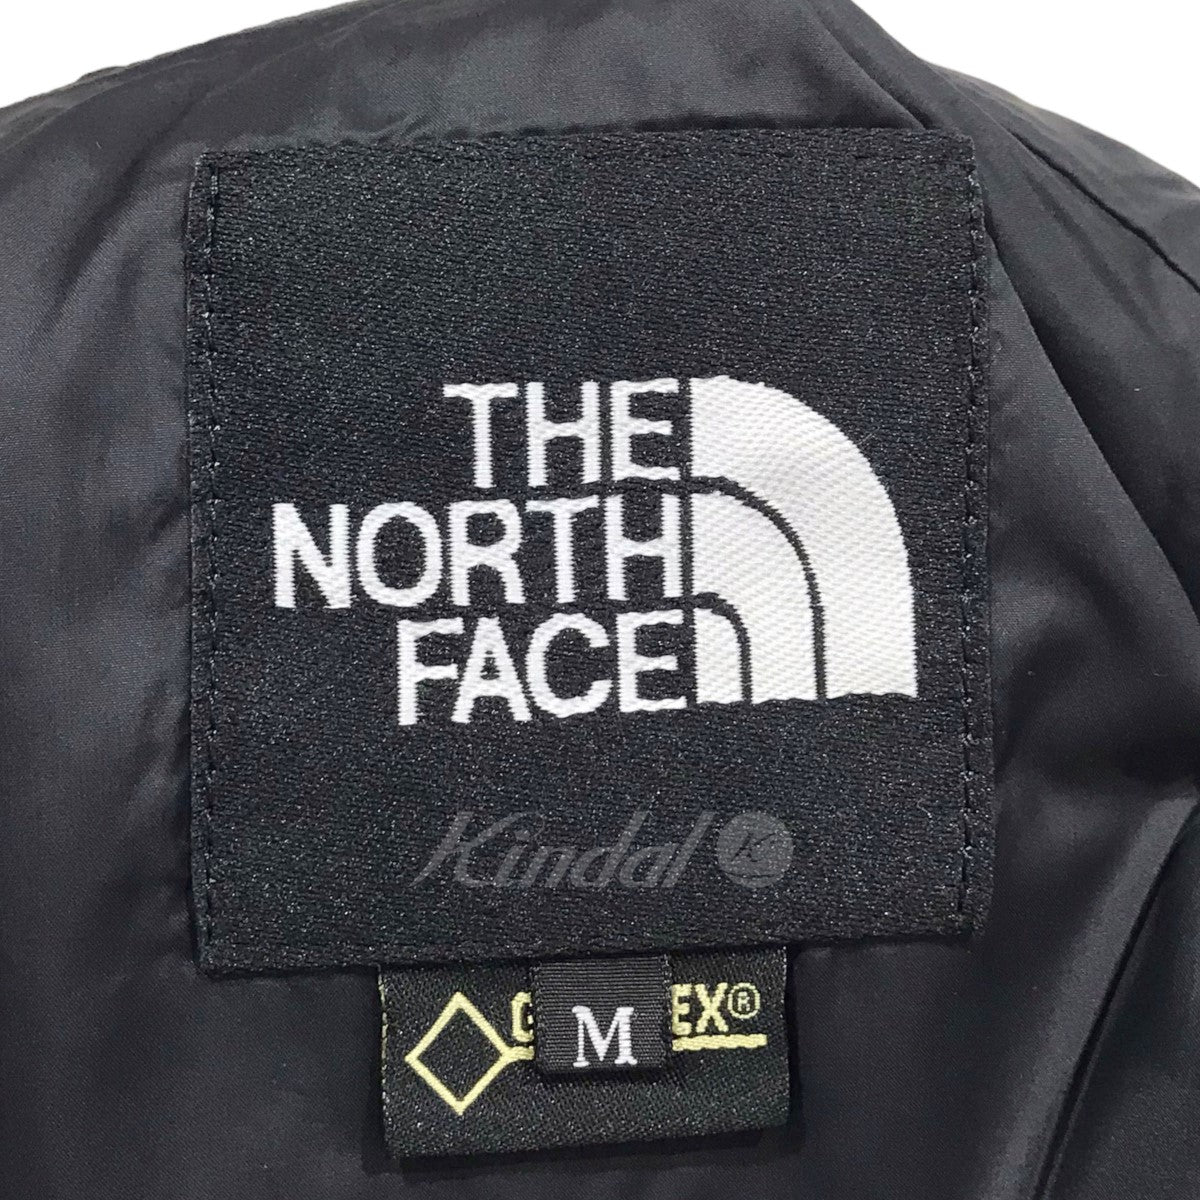 THE NORTH FACE(ザノースフェイス) マウンテンジャケット MOUNTAIN JACKET NP61400